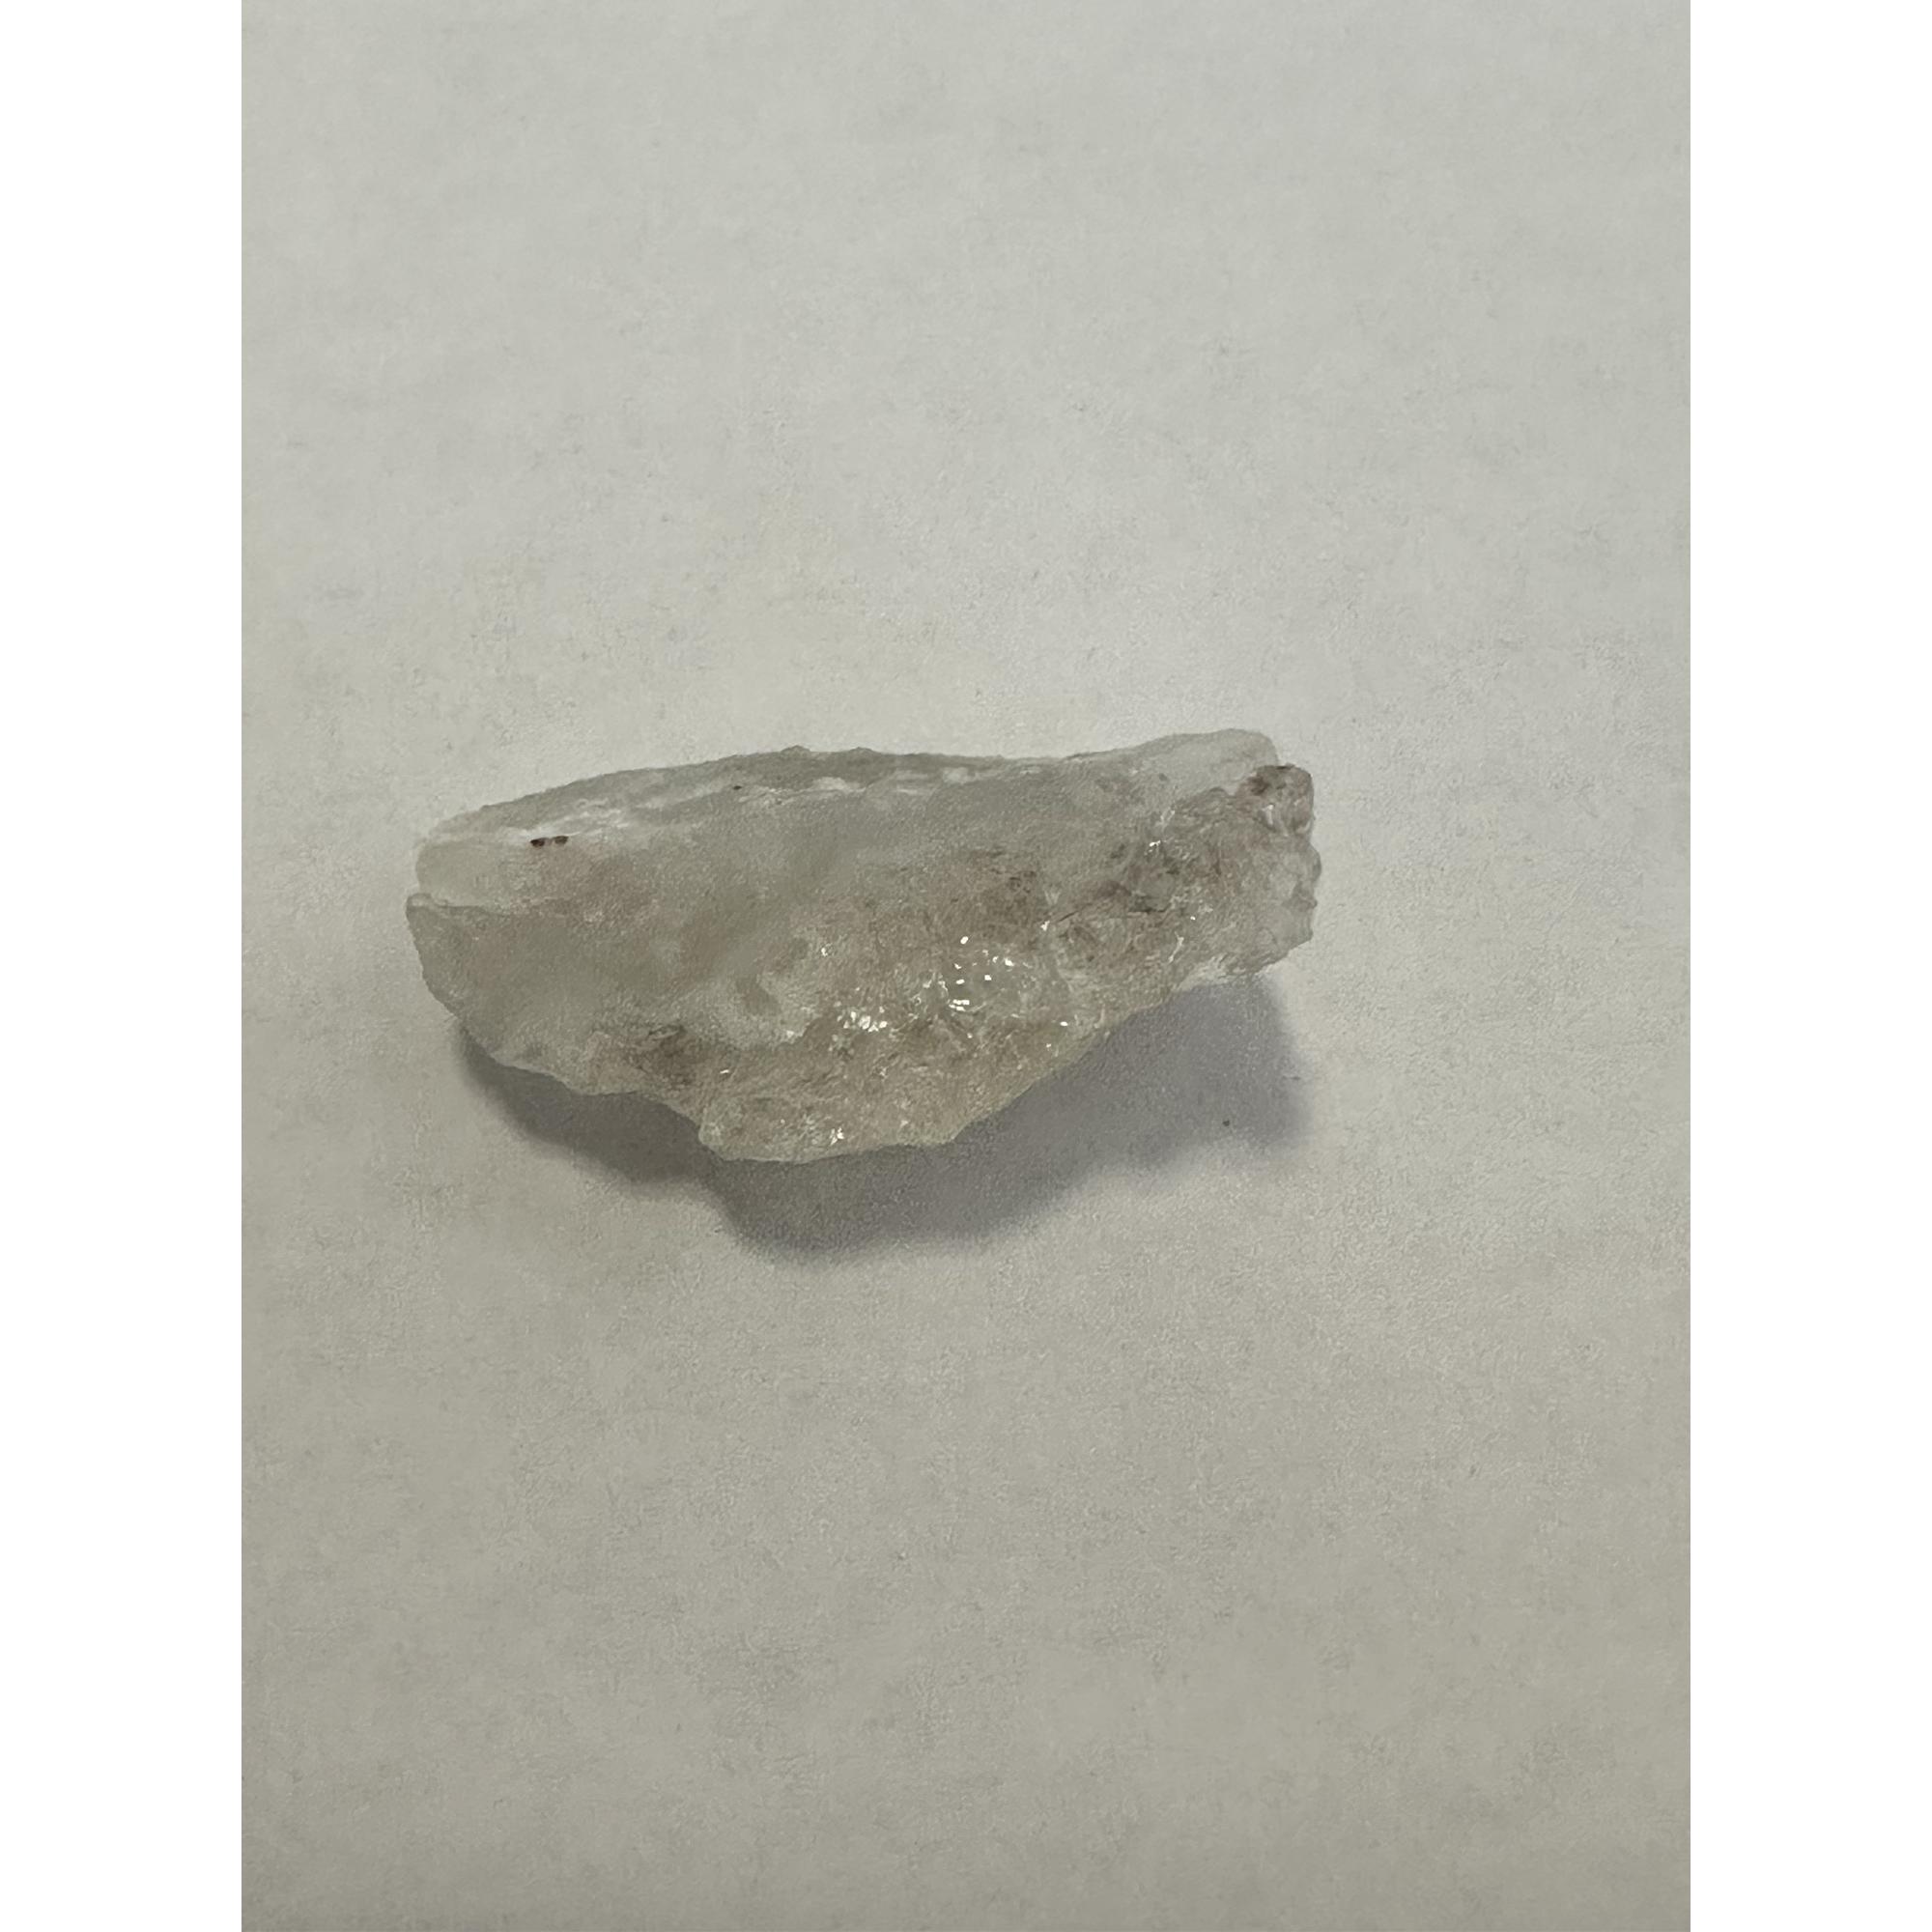 Opal, Hyalite, uv reactive, 8.96 grams, large and vibrant Prehistoric Online